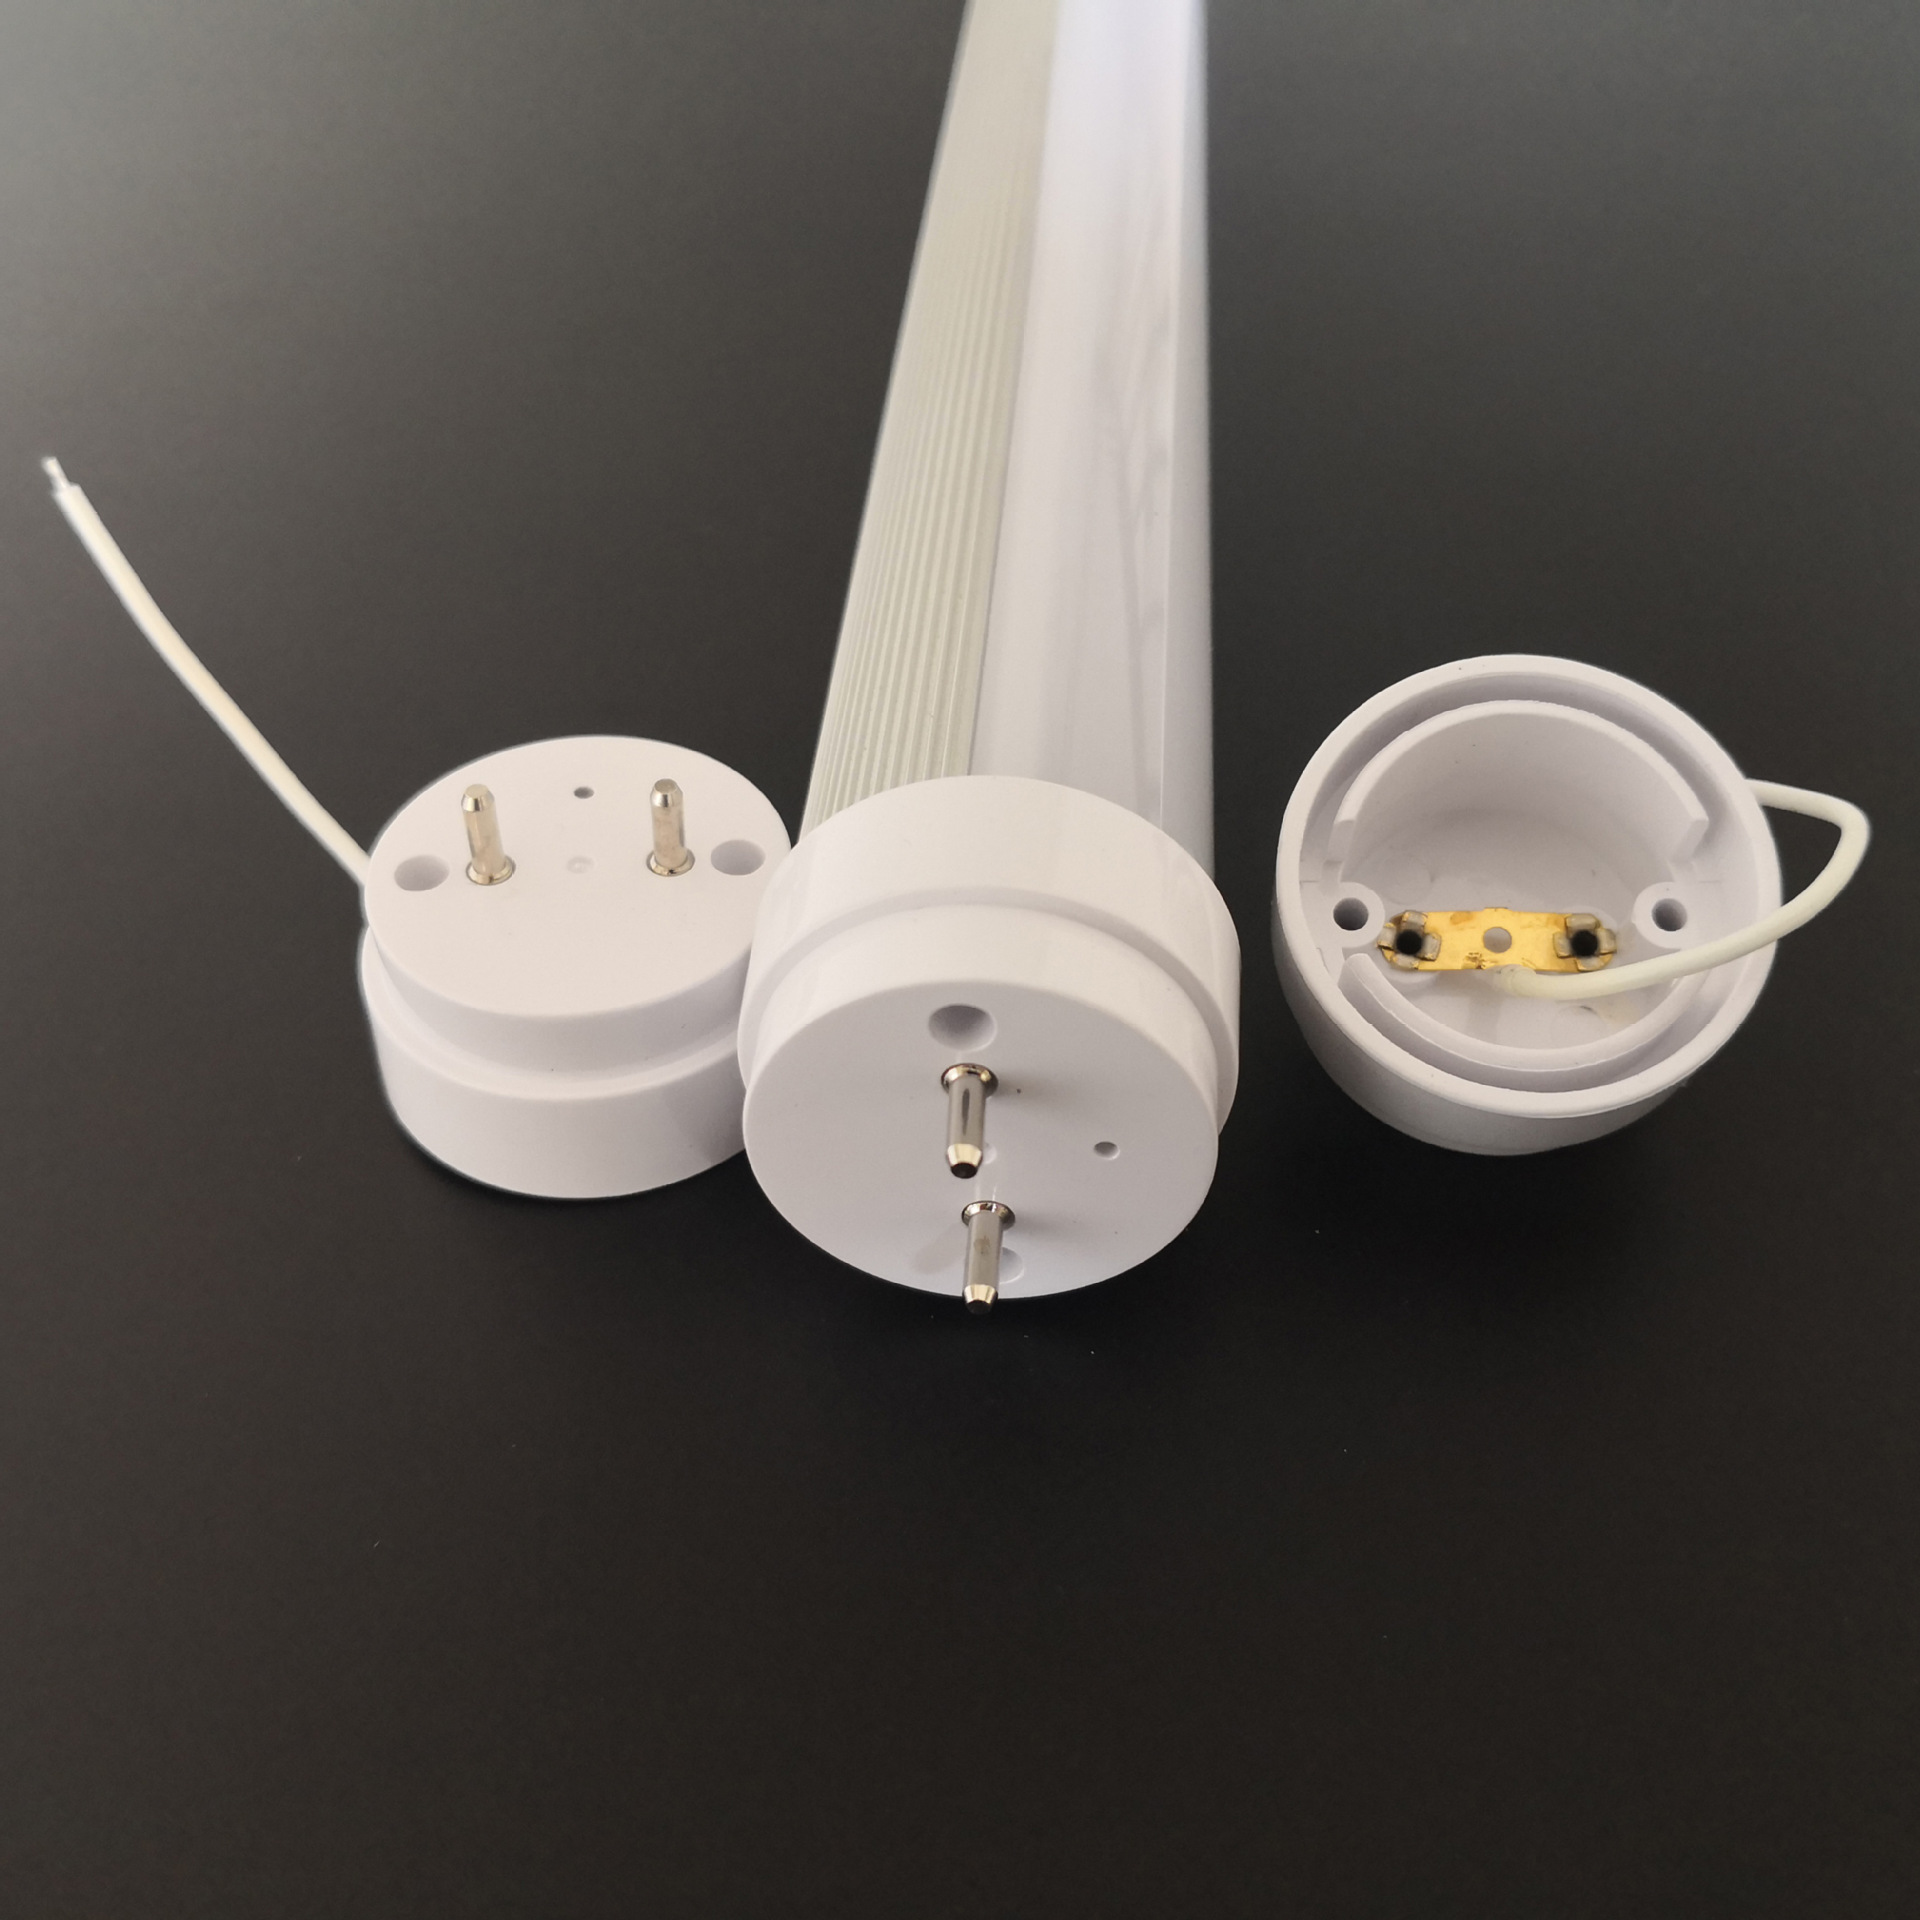 LED 튜브 하우징 원자재의 모양 및 방화 요구 사항